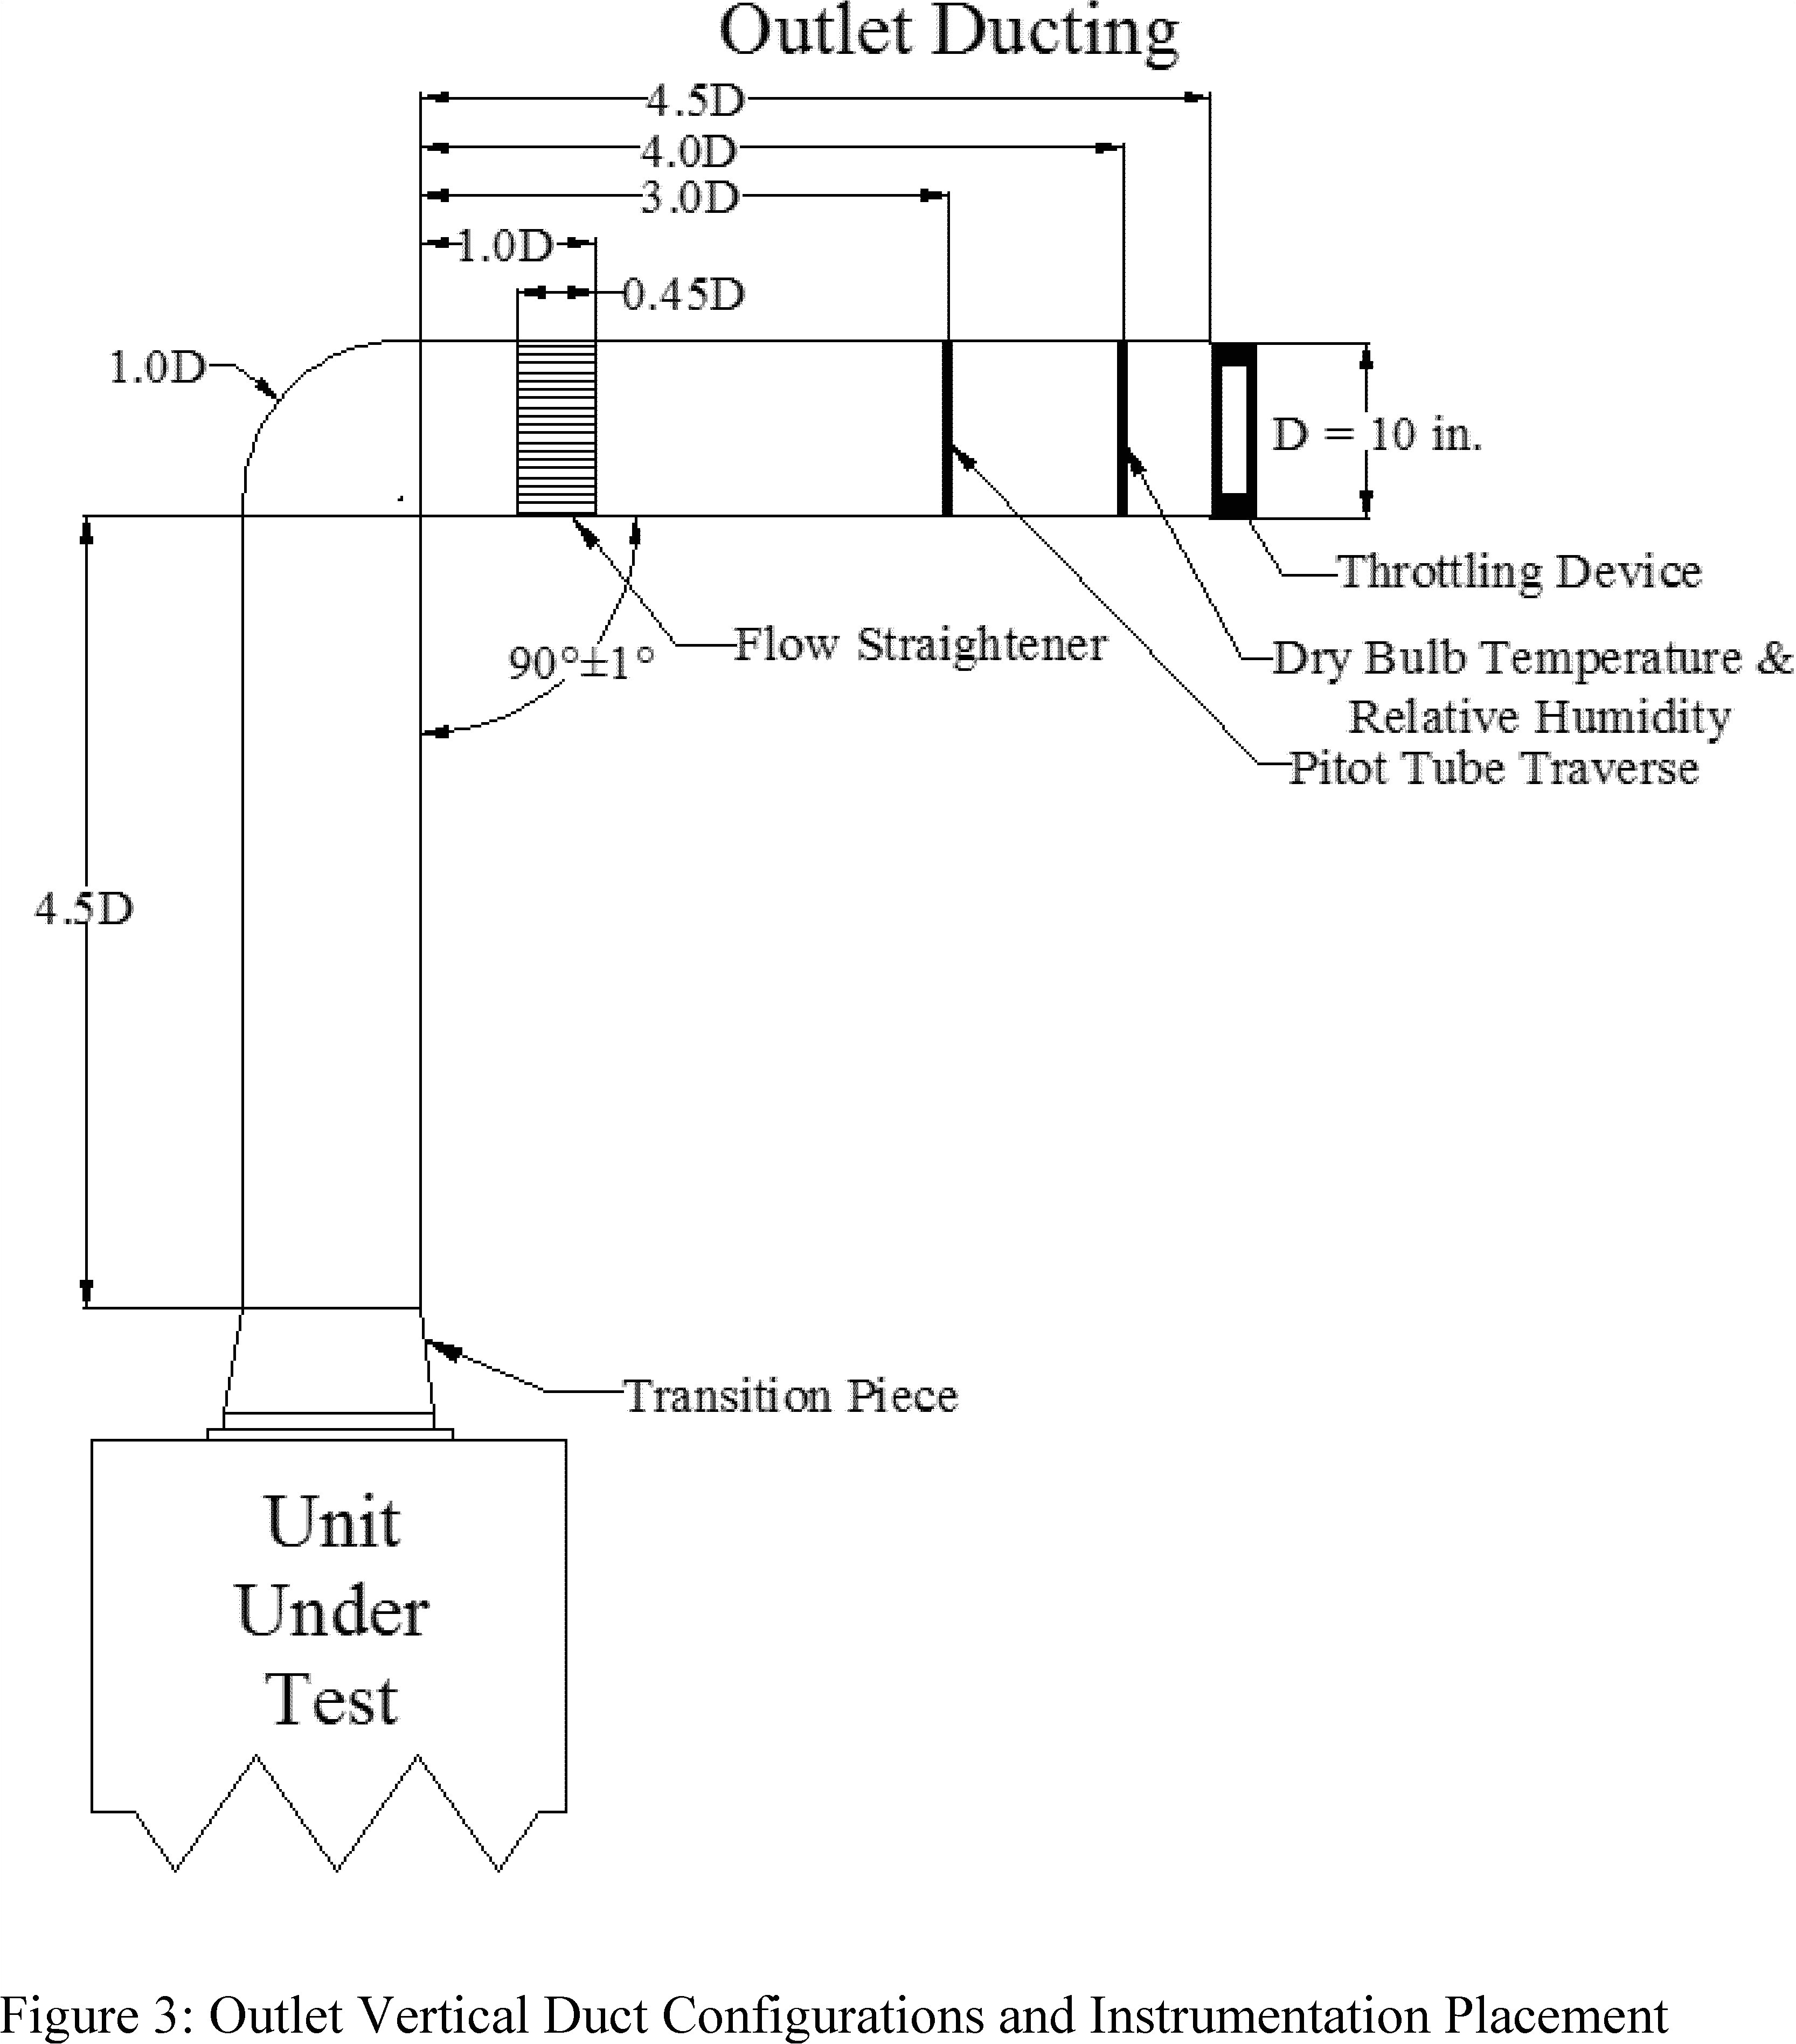 Motor Diagram Wiring Schematic Plug Wiring Diagram Dry Wiring Diagram Show